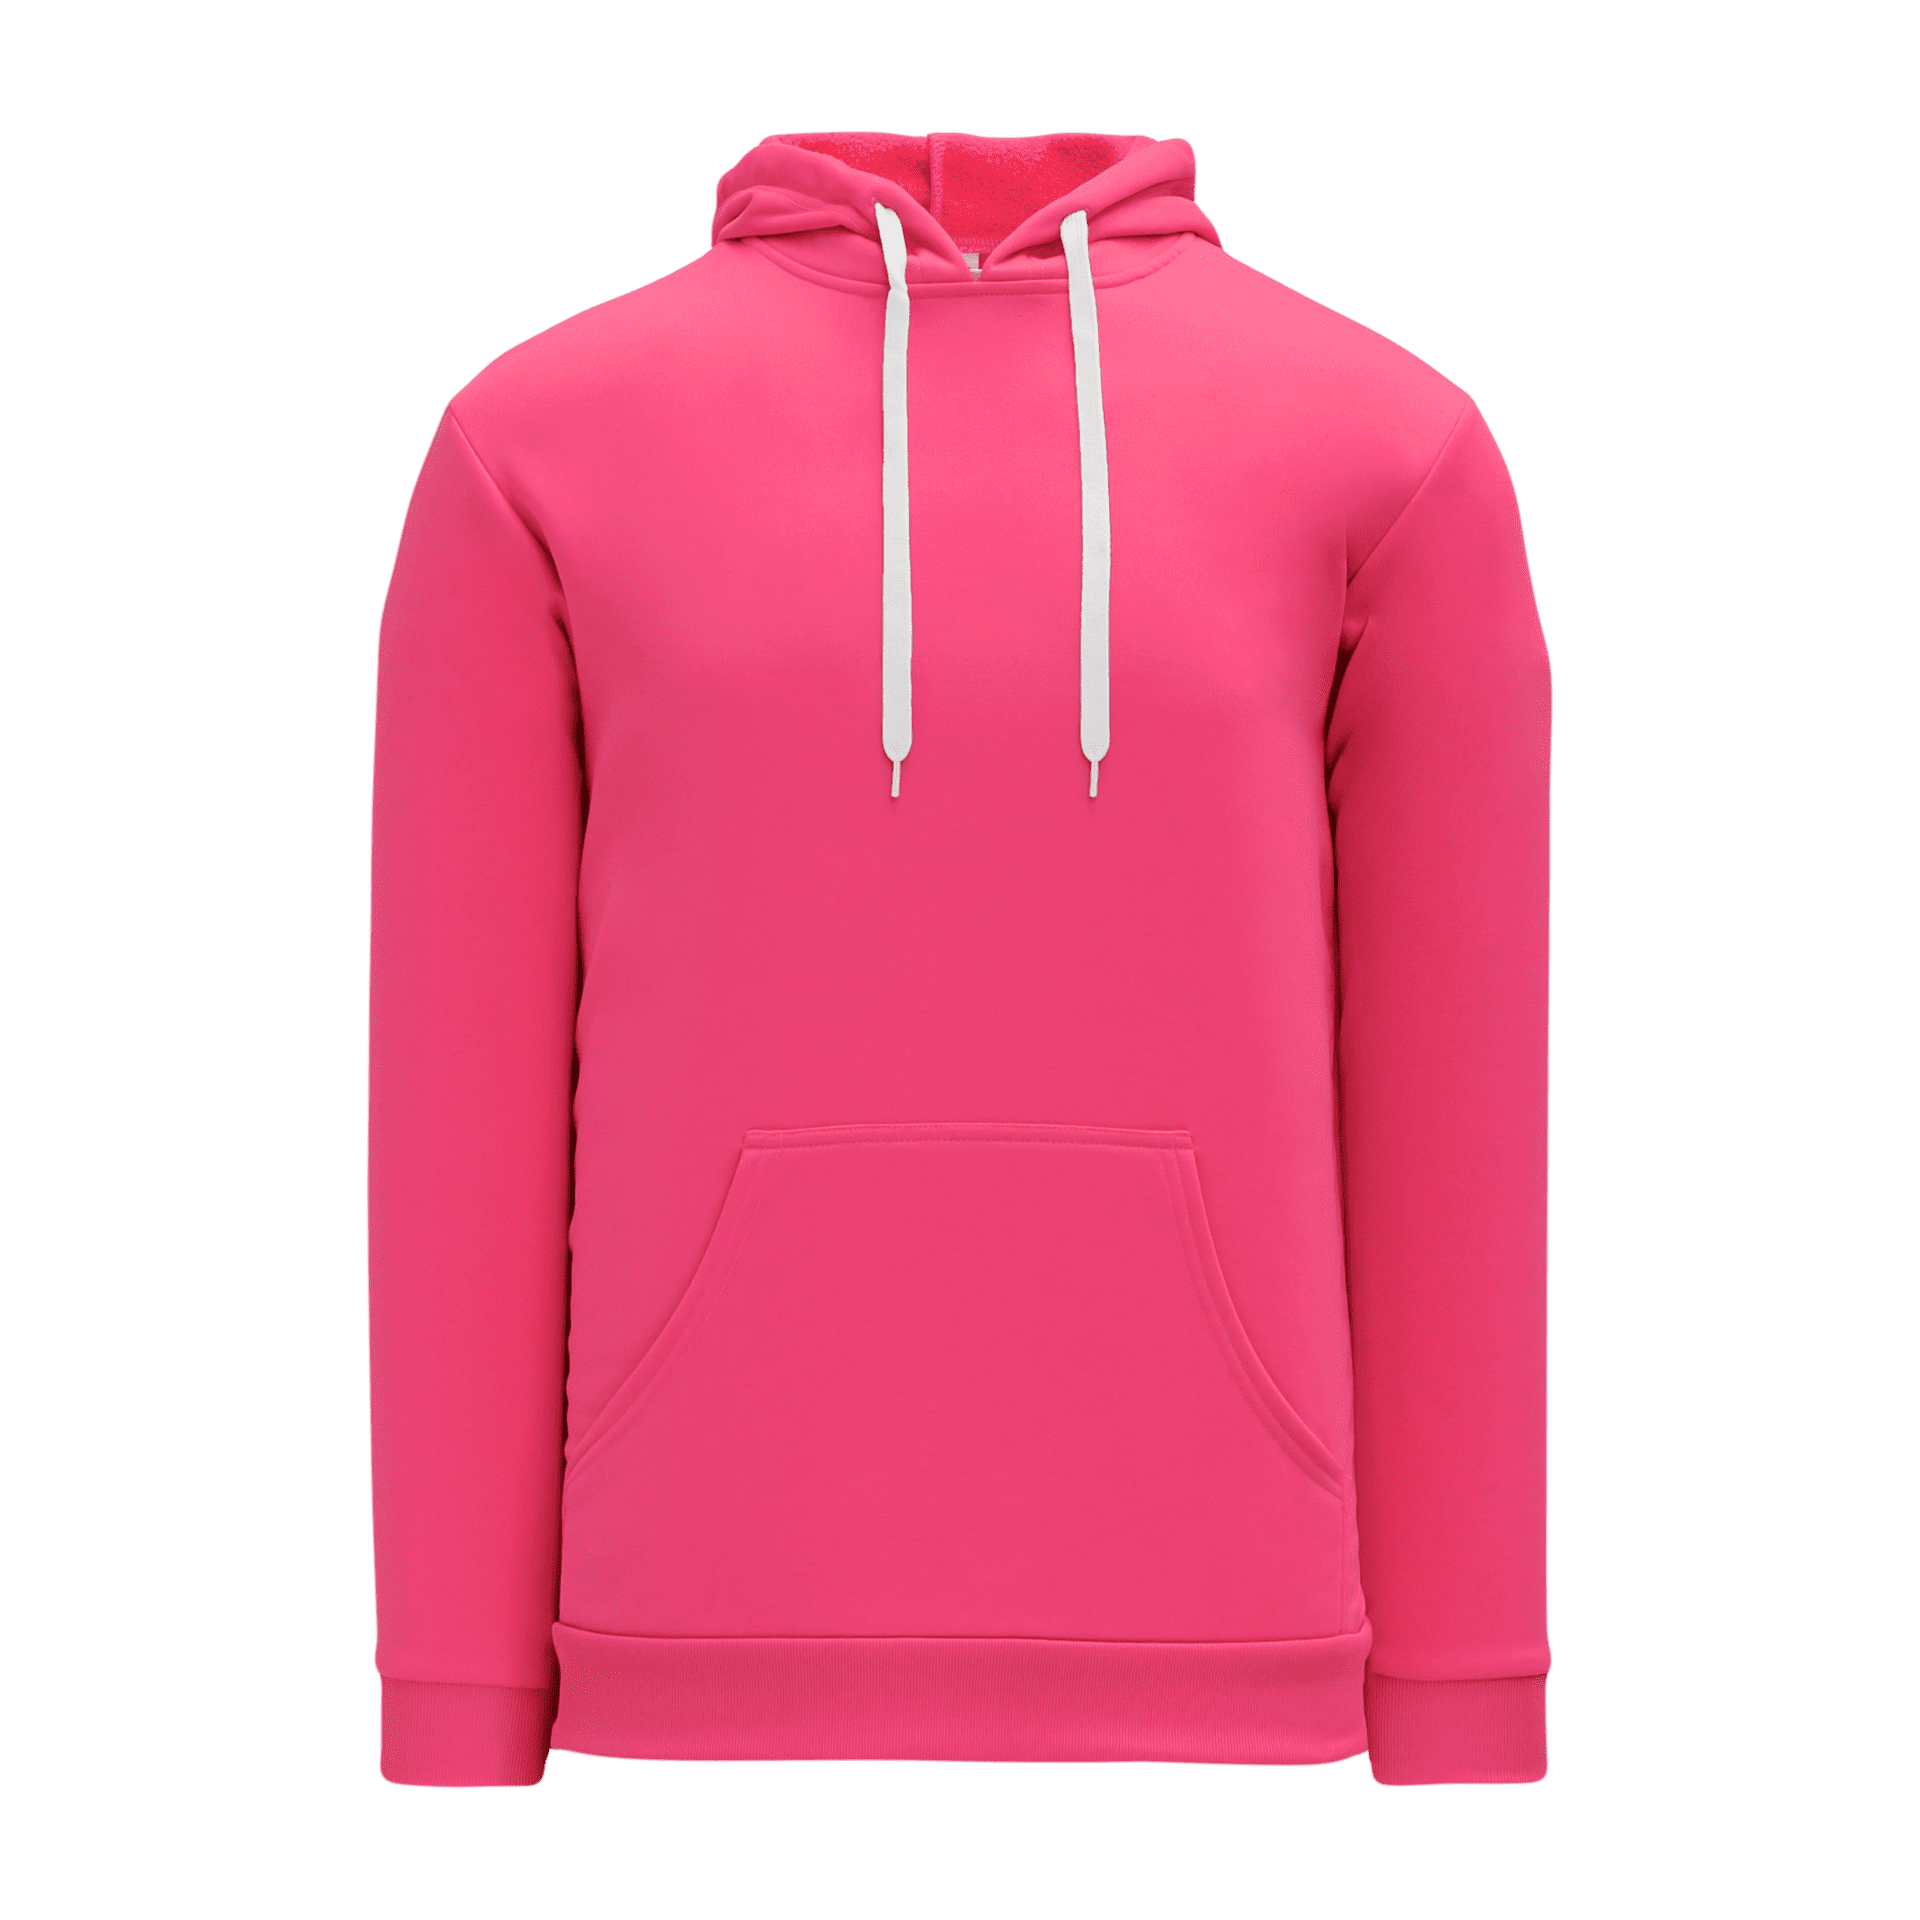 ATHLETIC KNIT Polyfleece Hooded Sweatshirt #A1835 Pink